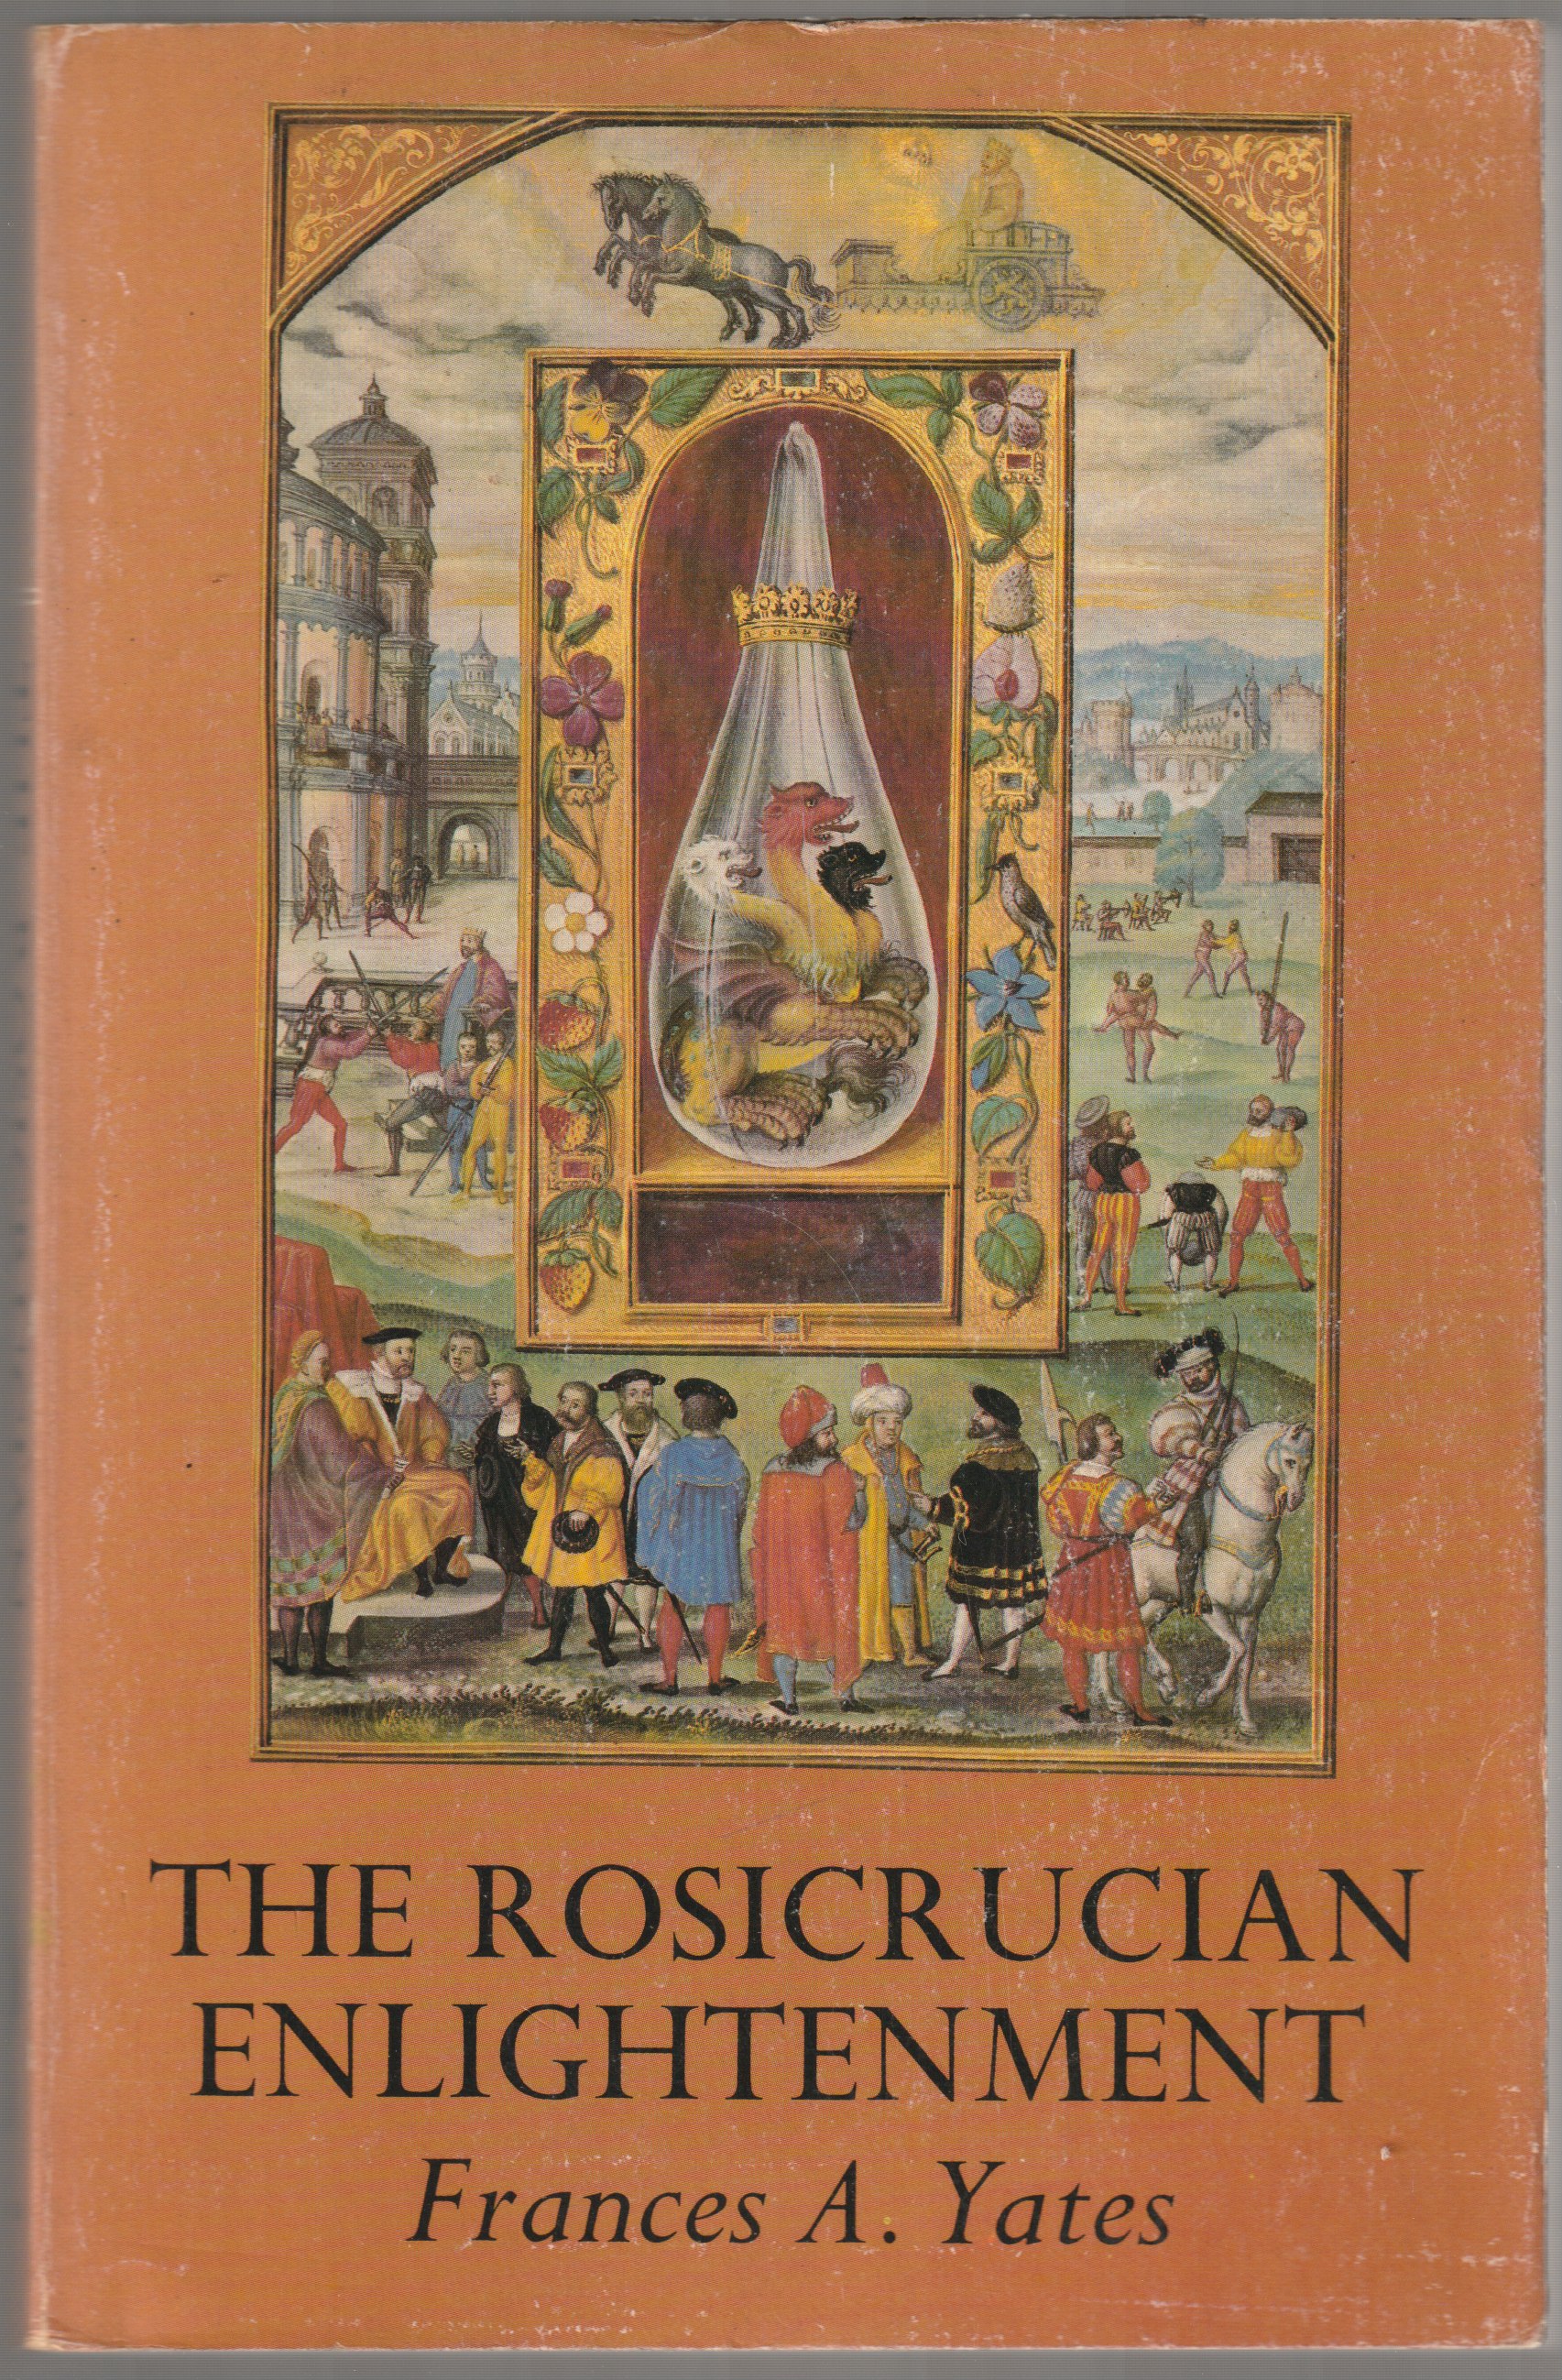 The Rosicrucian enlightenment